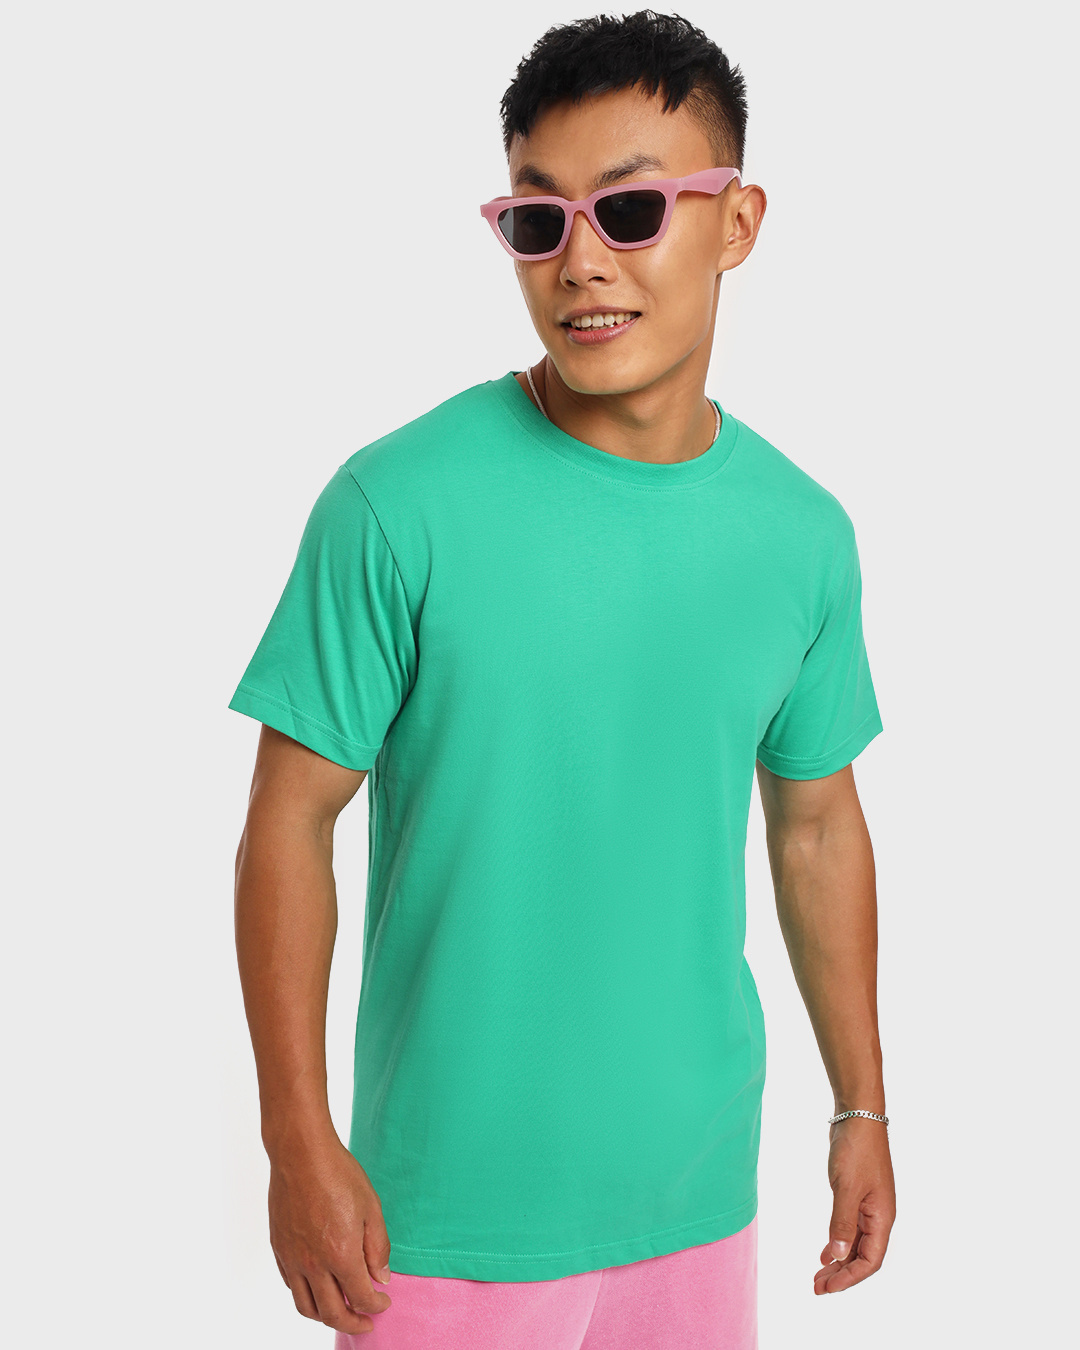 Buy Men's Green T-shirt Online at Bewakoof